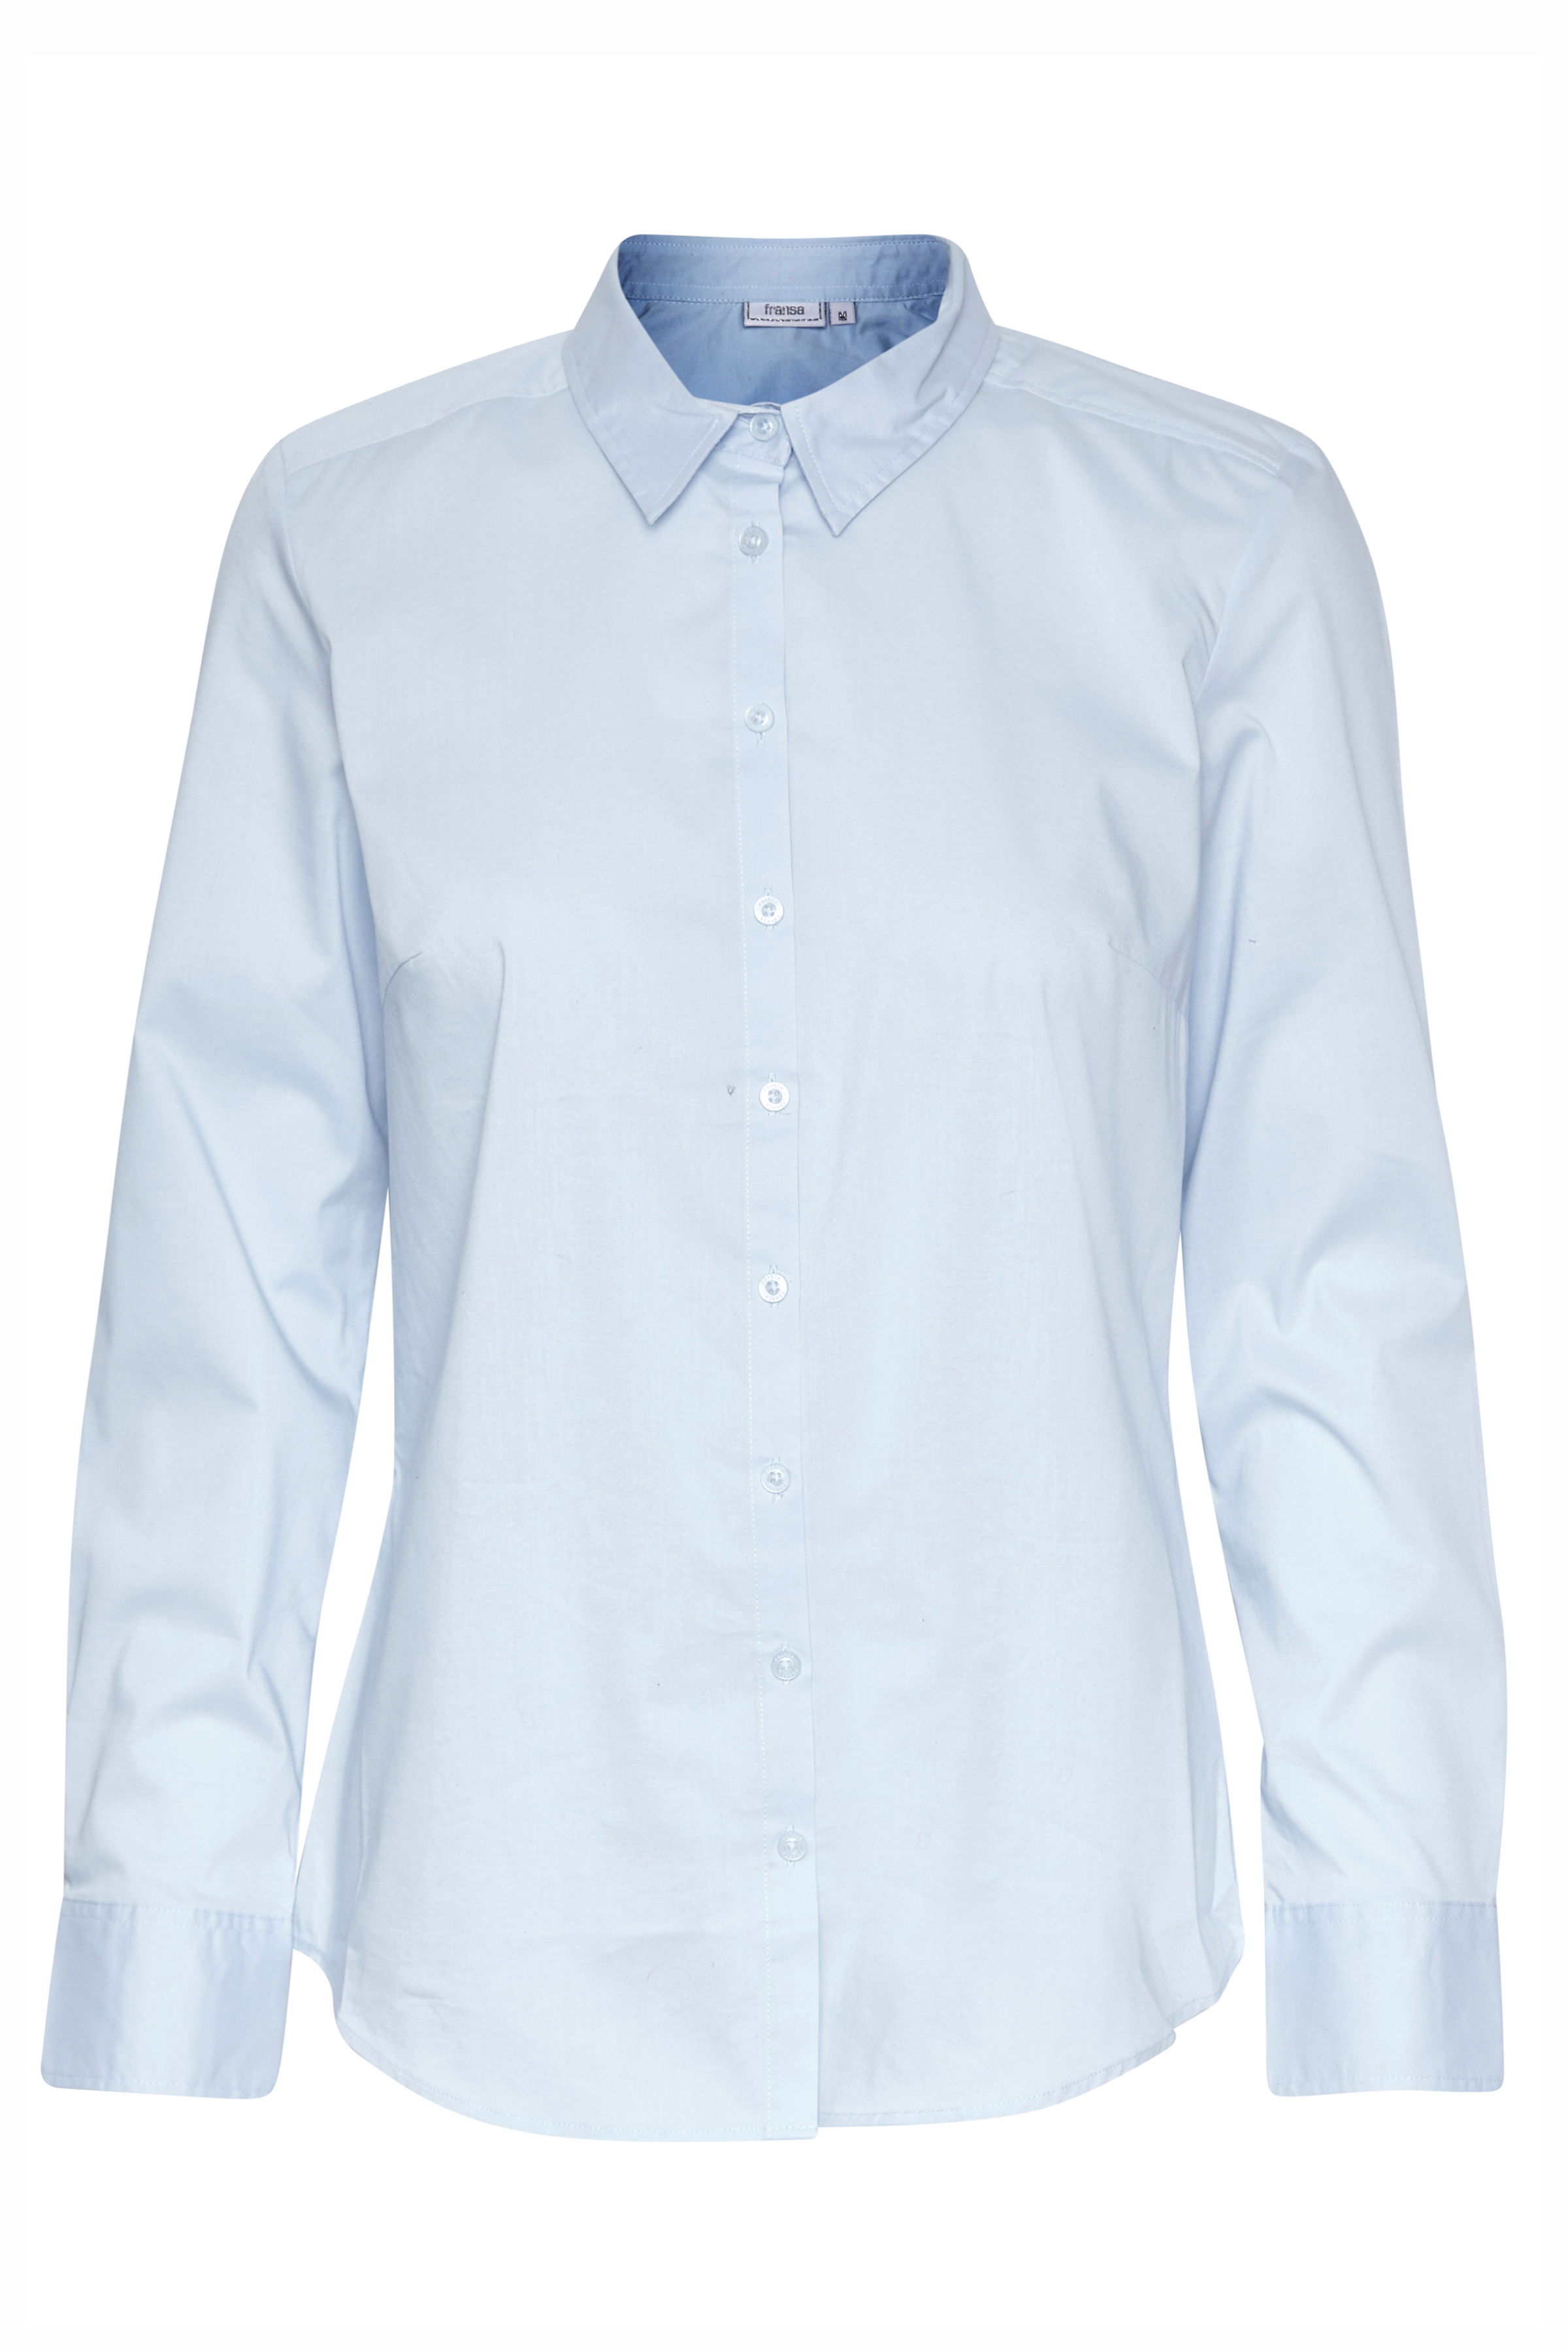 Zashirt 1 skjorte, blue, large